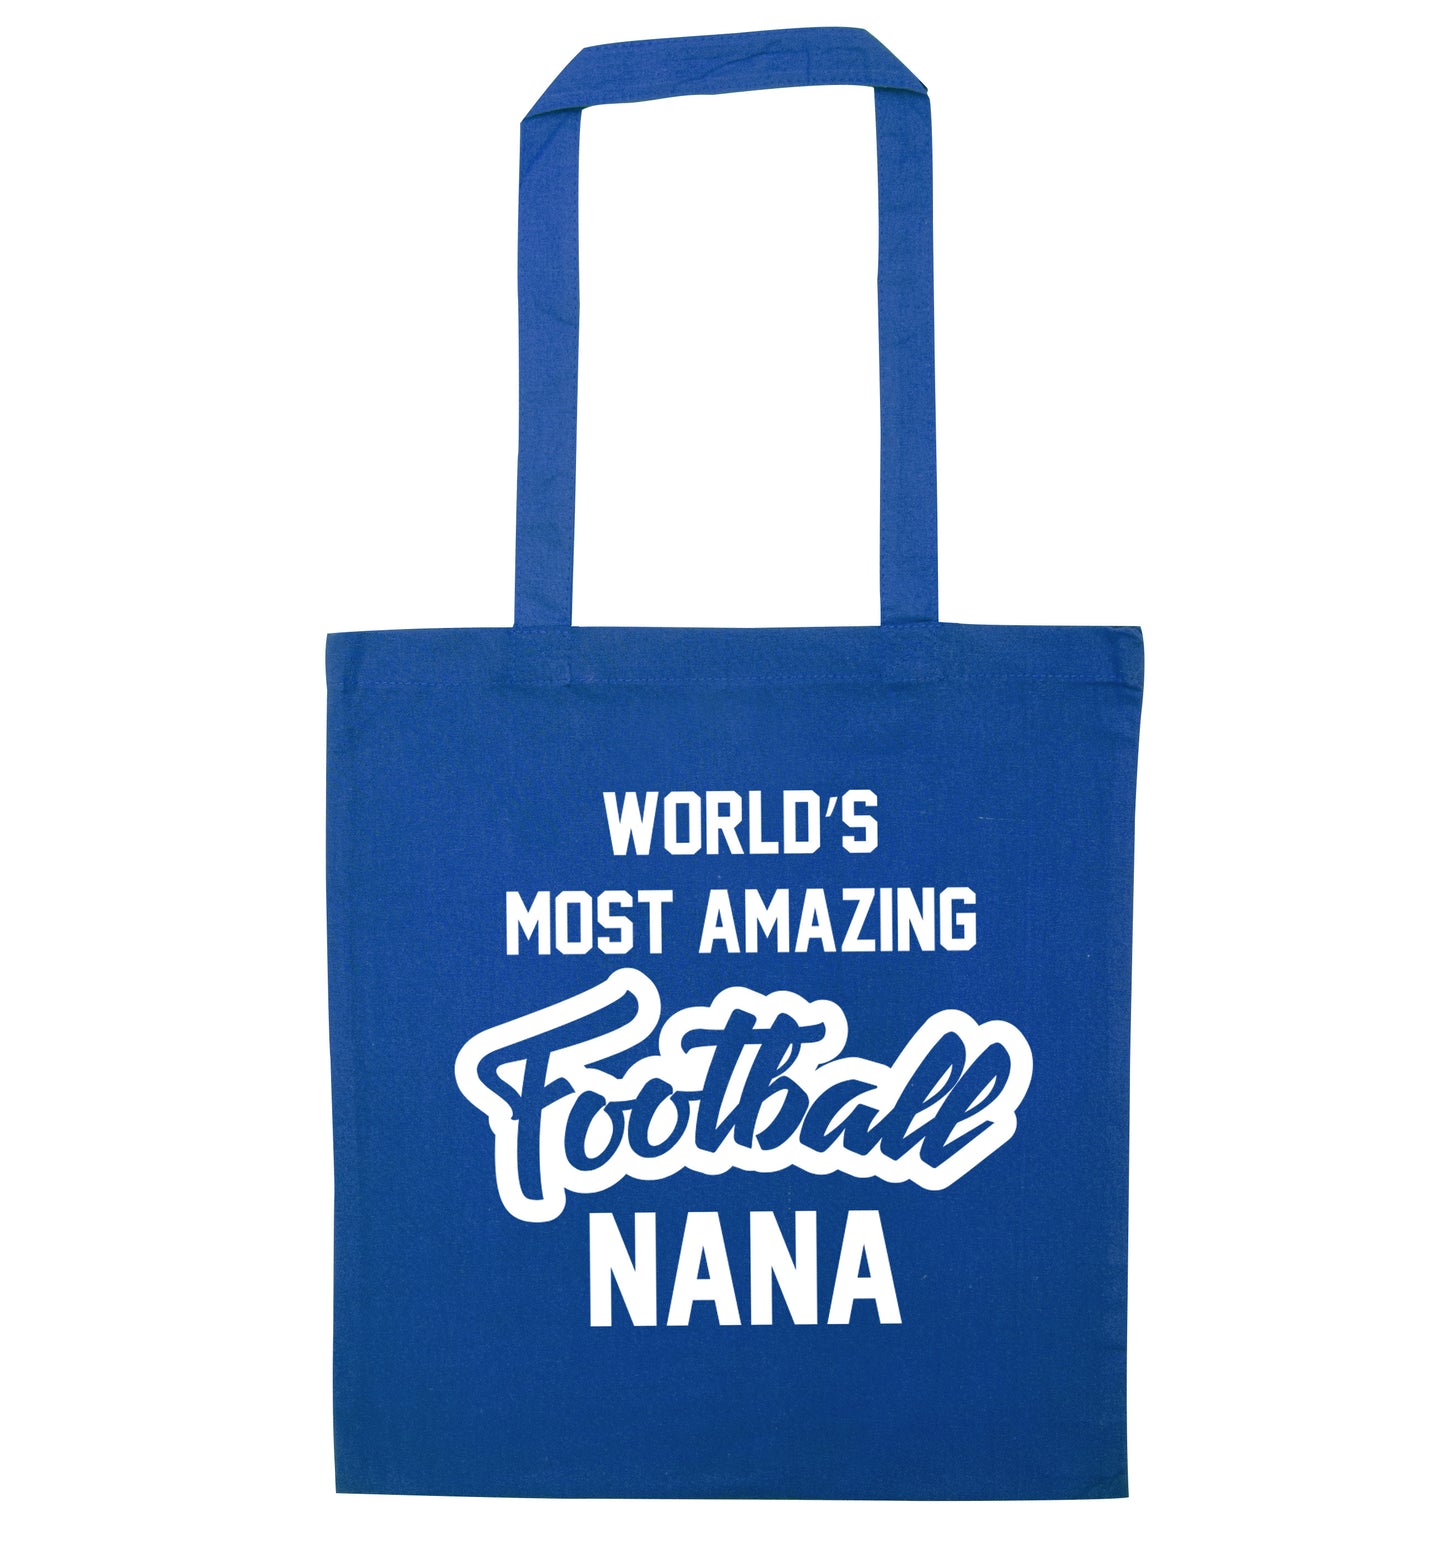 Worlds most amazing football nana blue tote bag